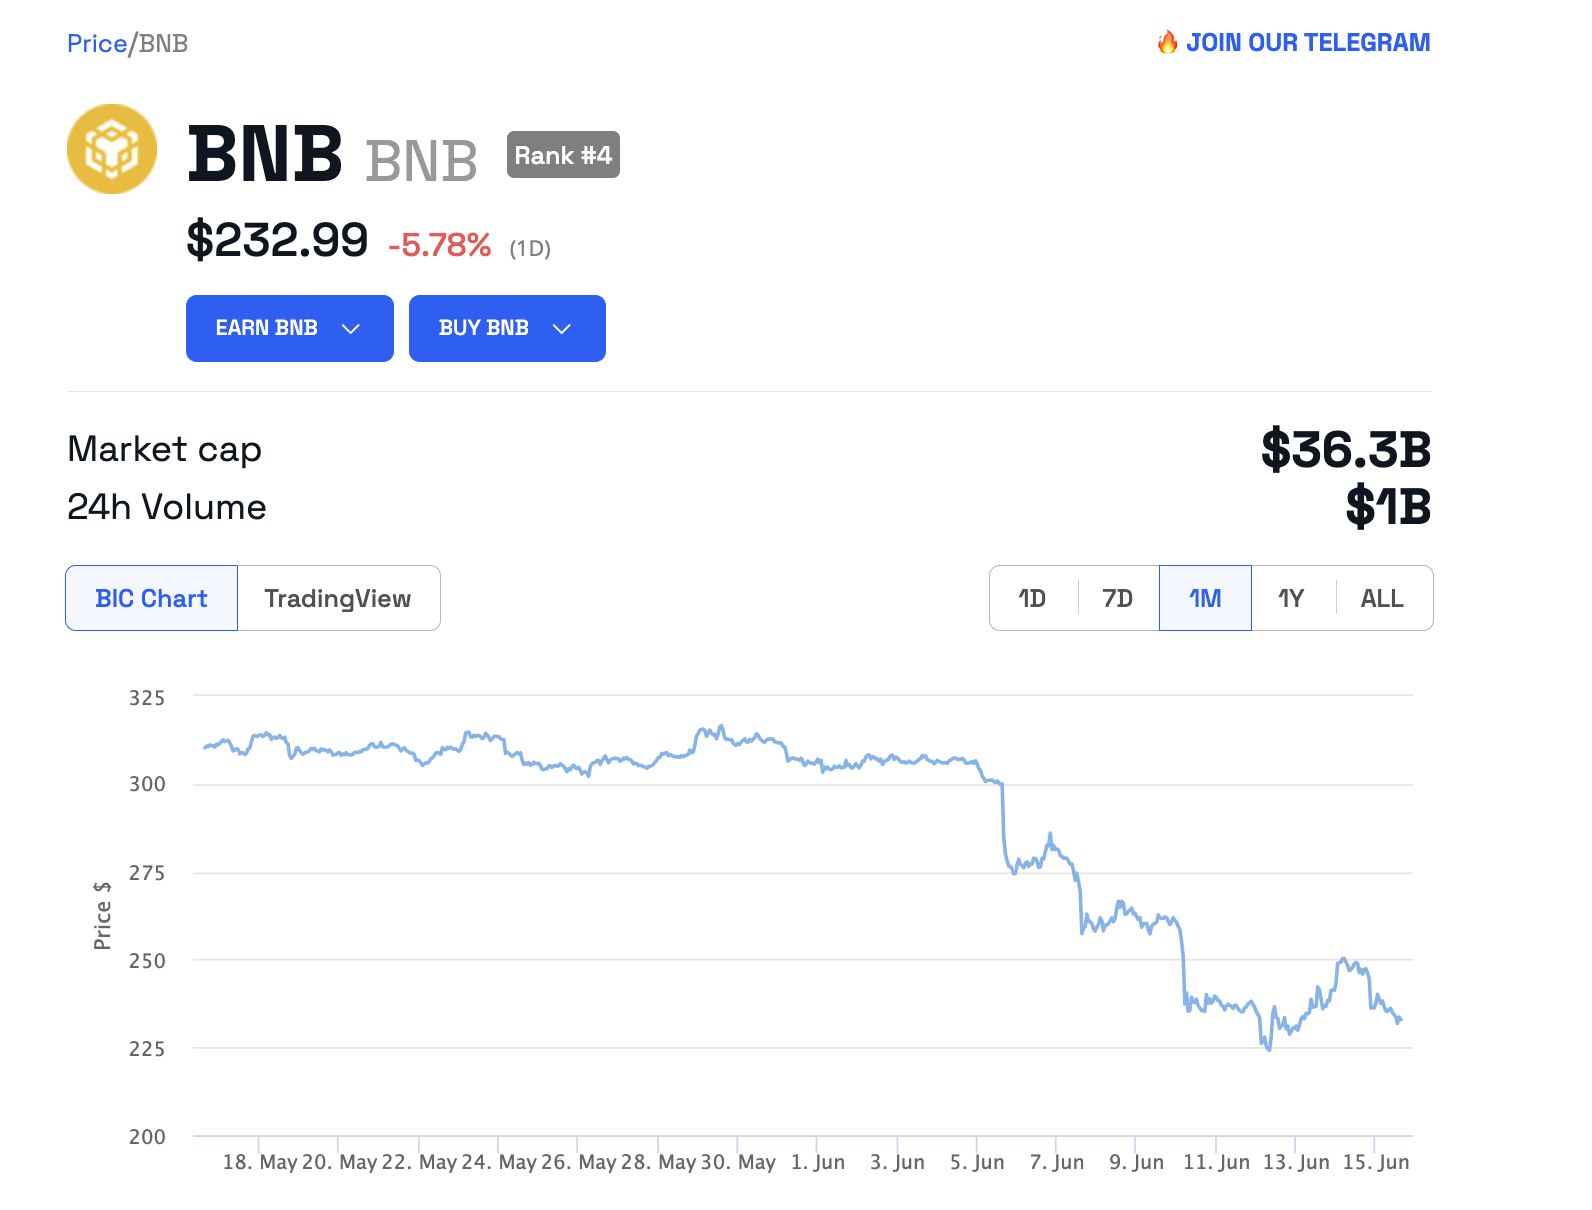 BNB token trading at $232.99